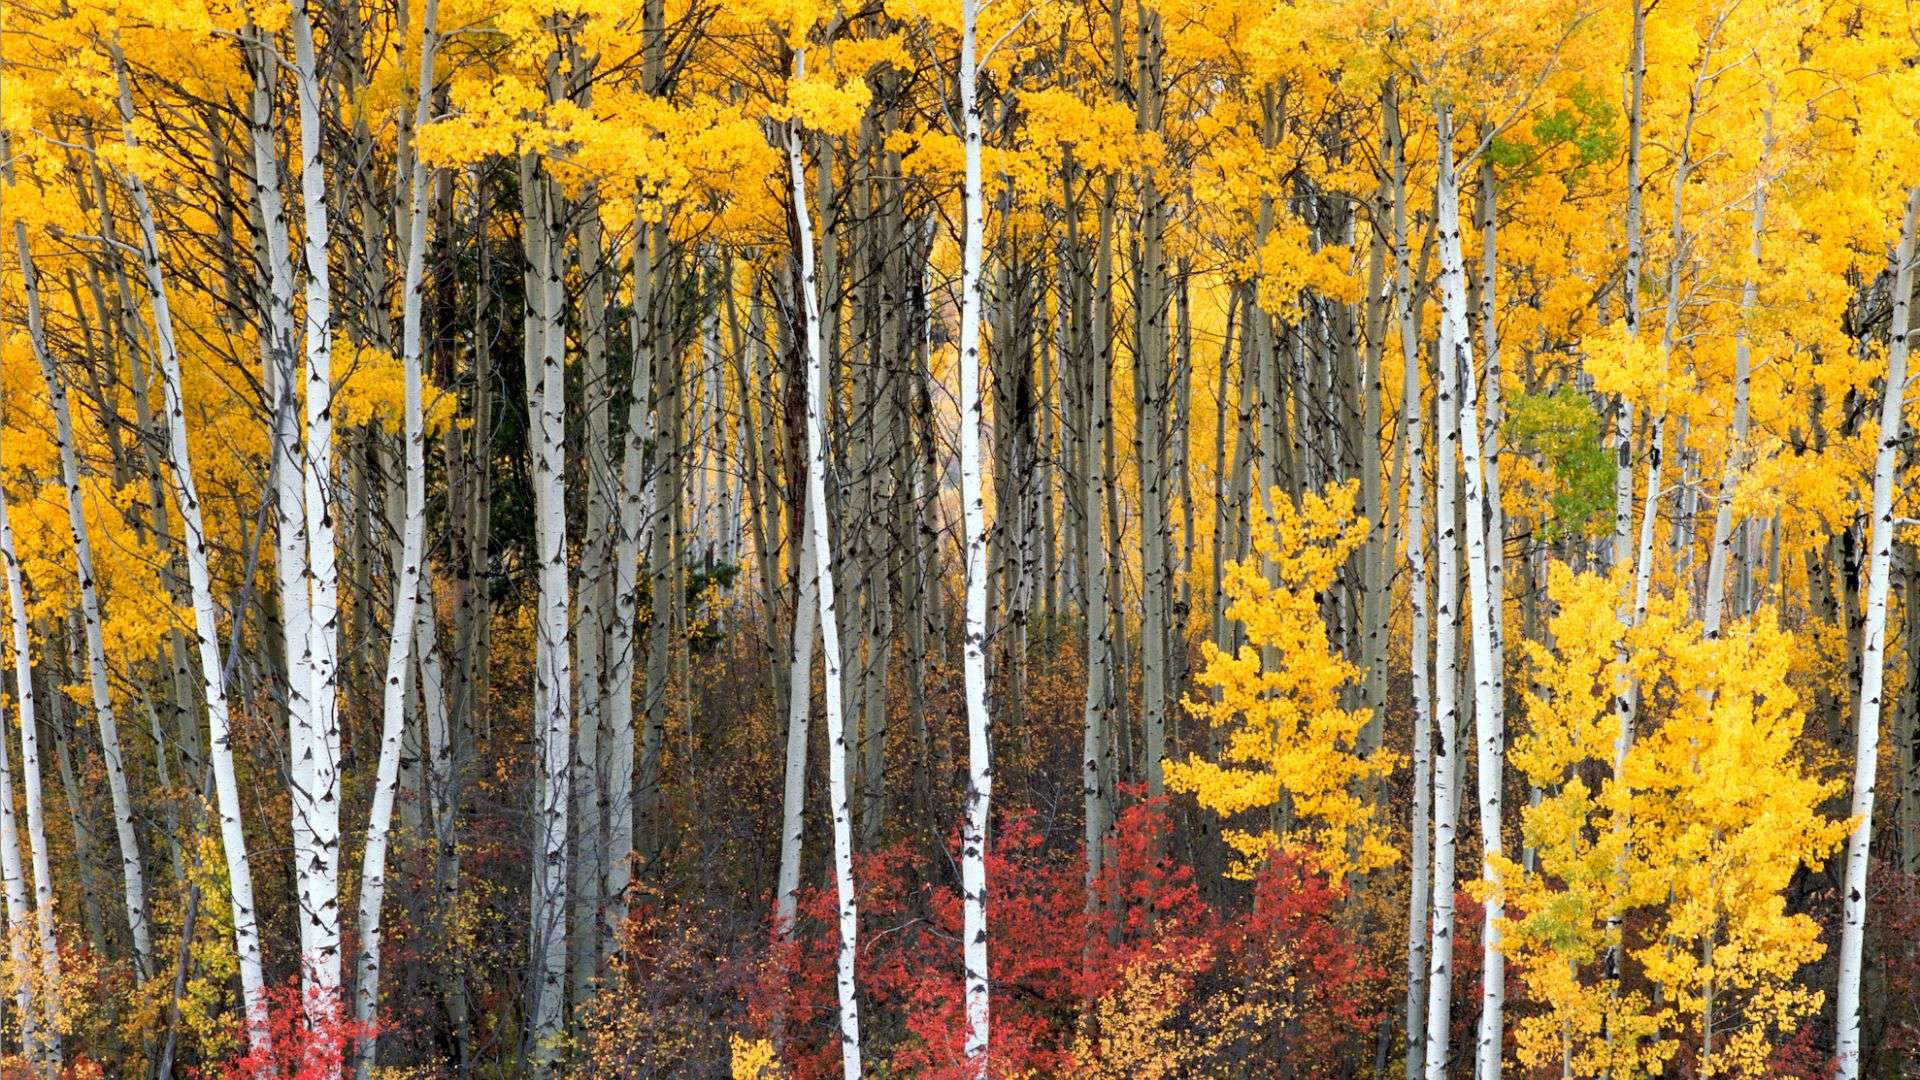 Aspen and mountain maple trees in fall color. Teton Range, ID.